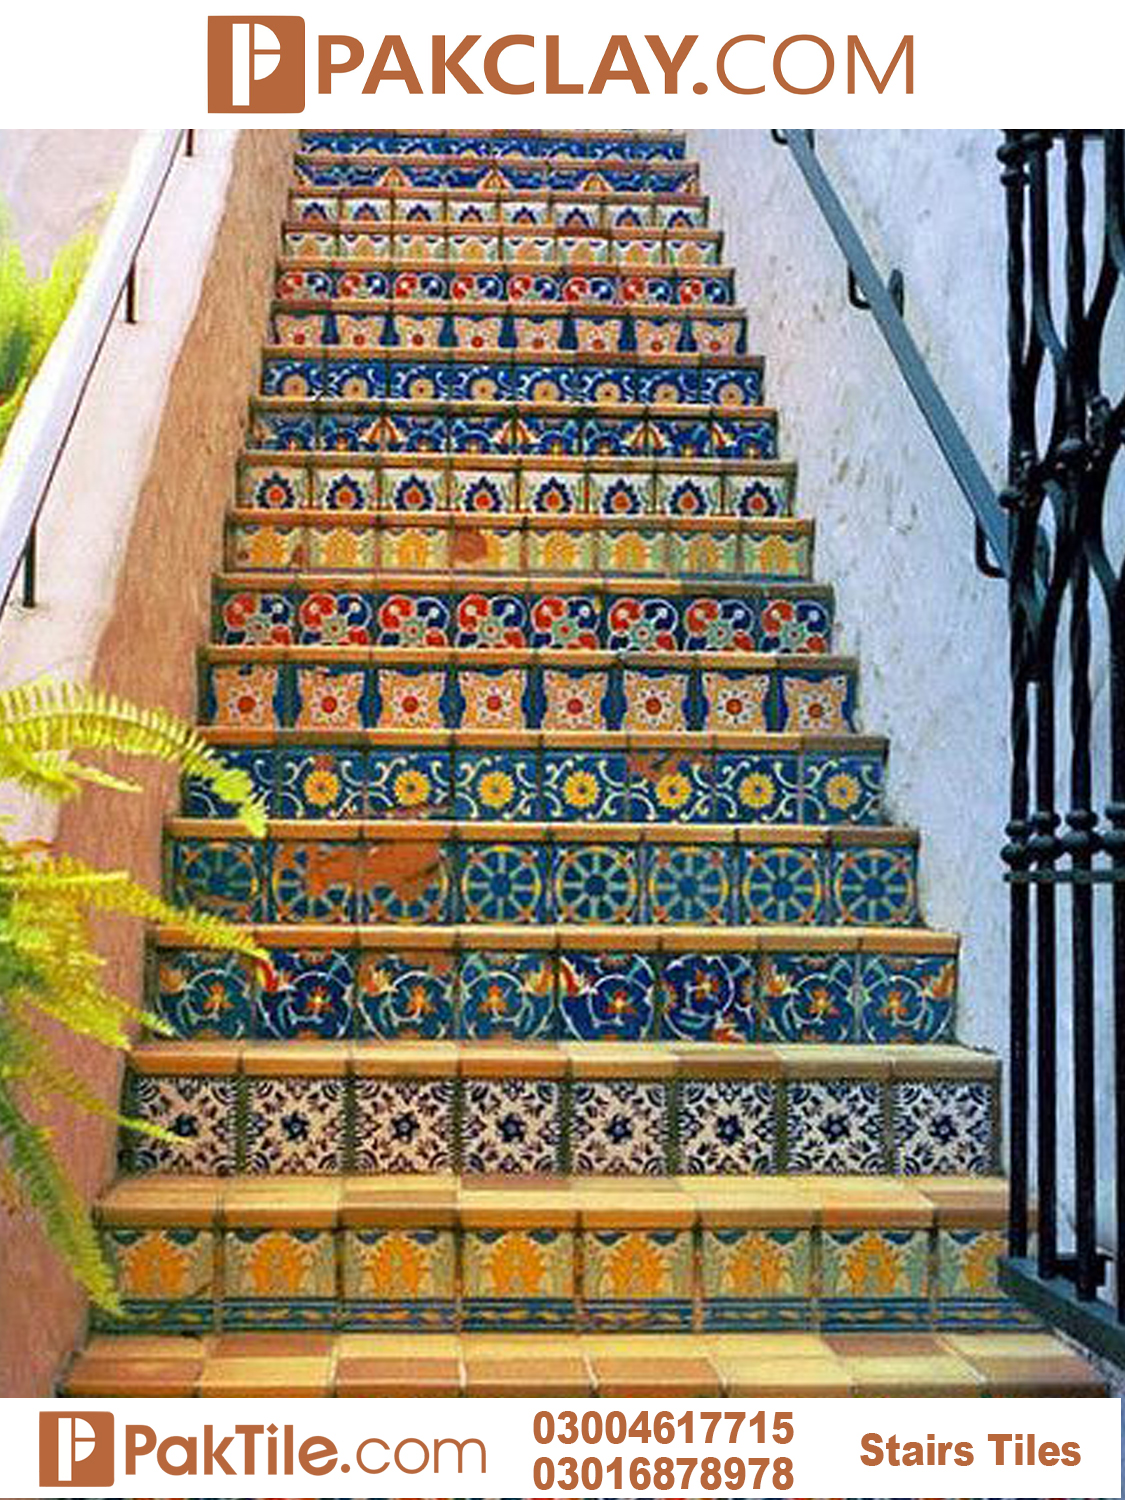 2 Pak Clay Ceramic Multani Staircase Tiles Design